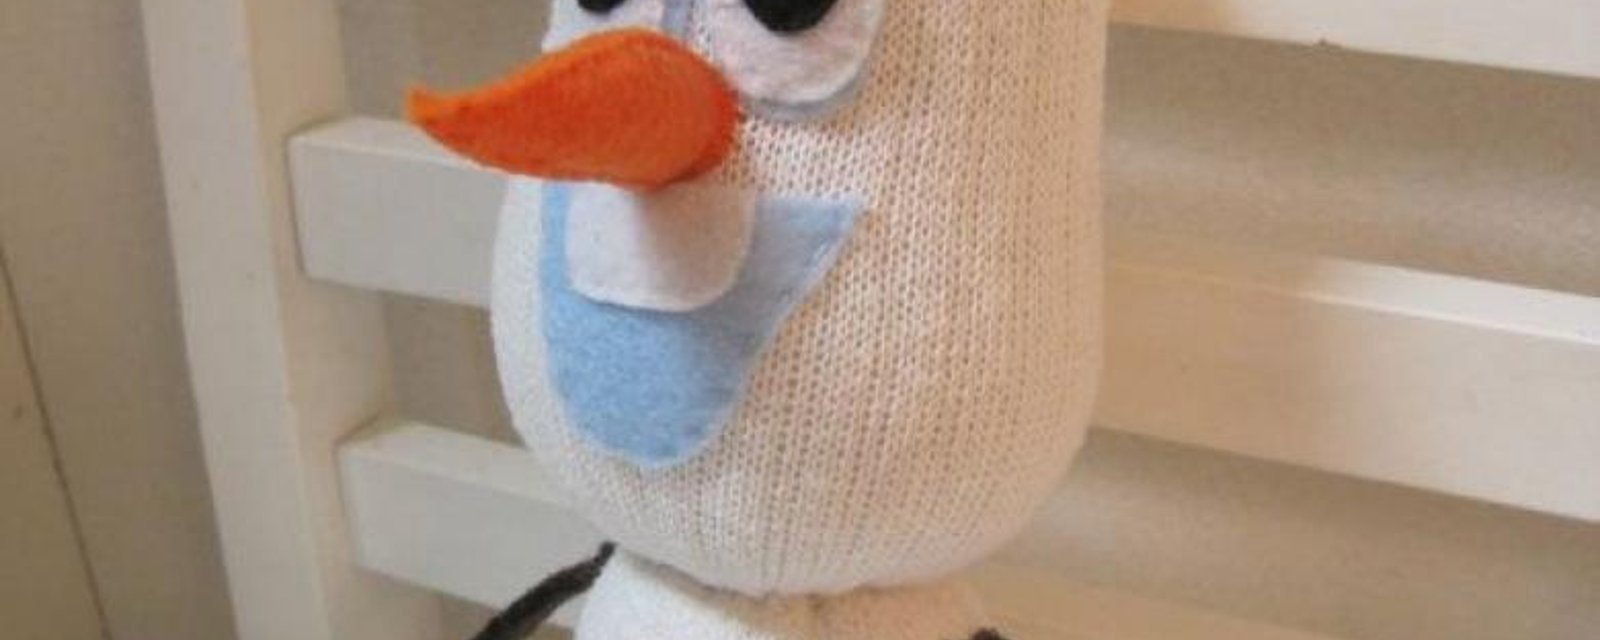 OLAF! On bricole des OLAF et ils sont lourds! 